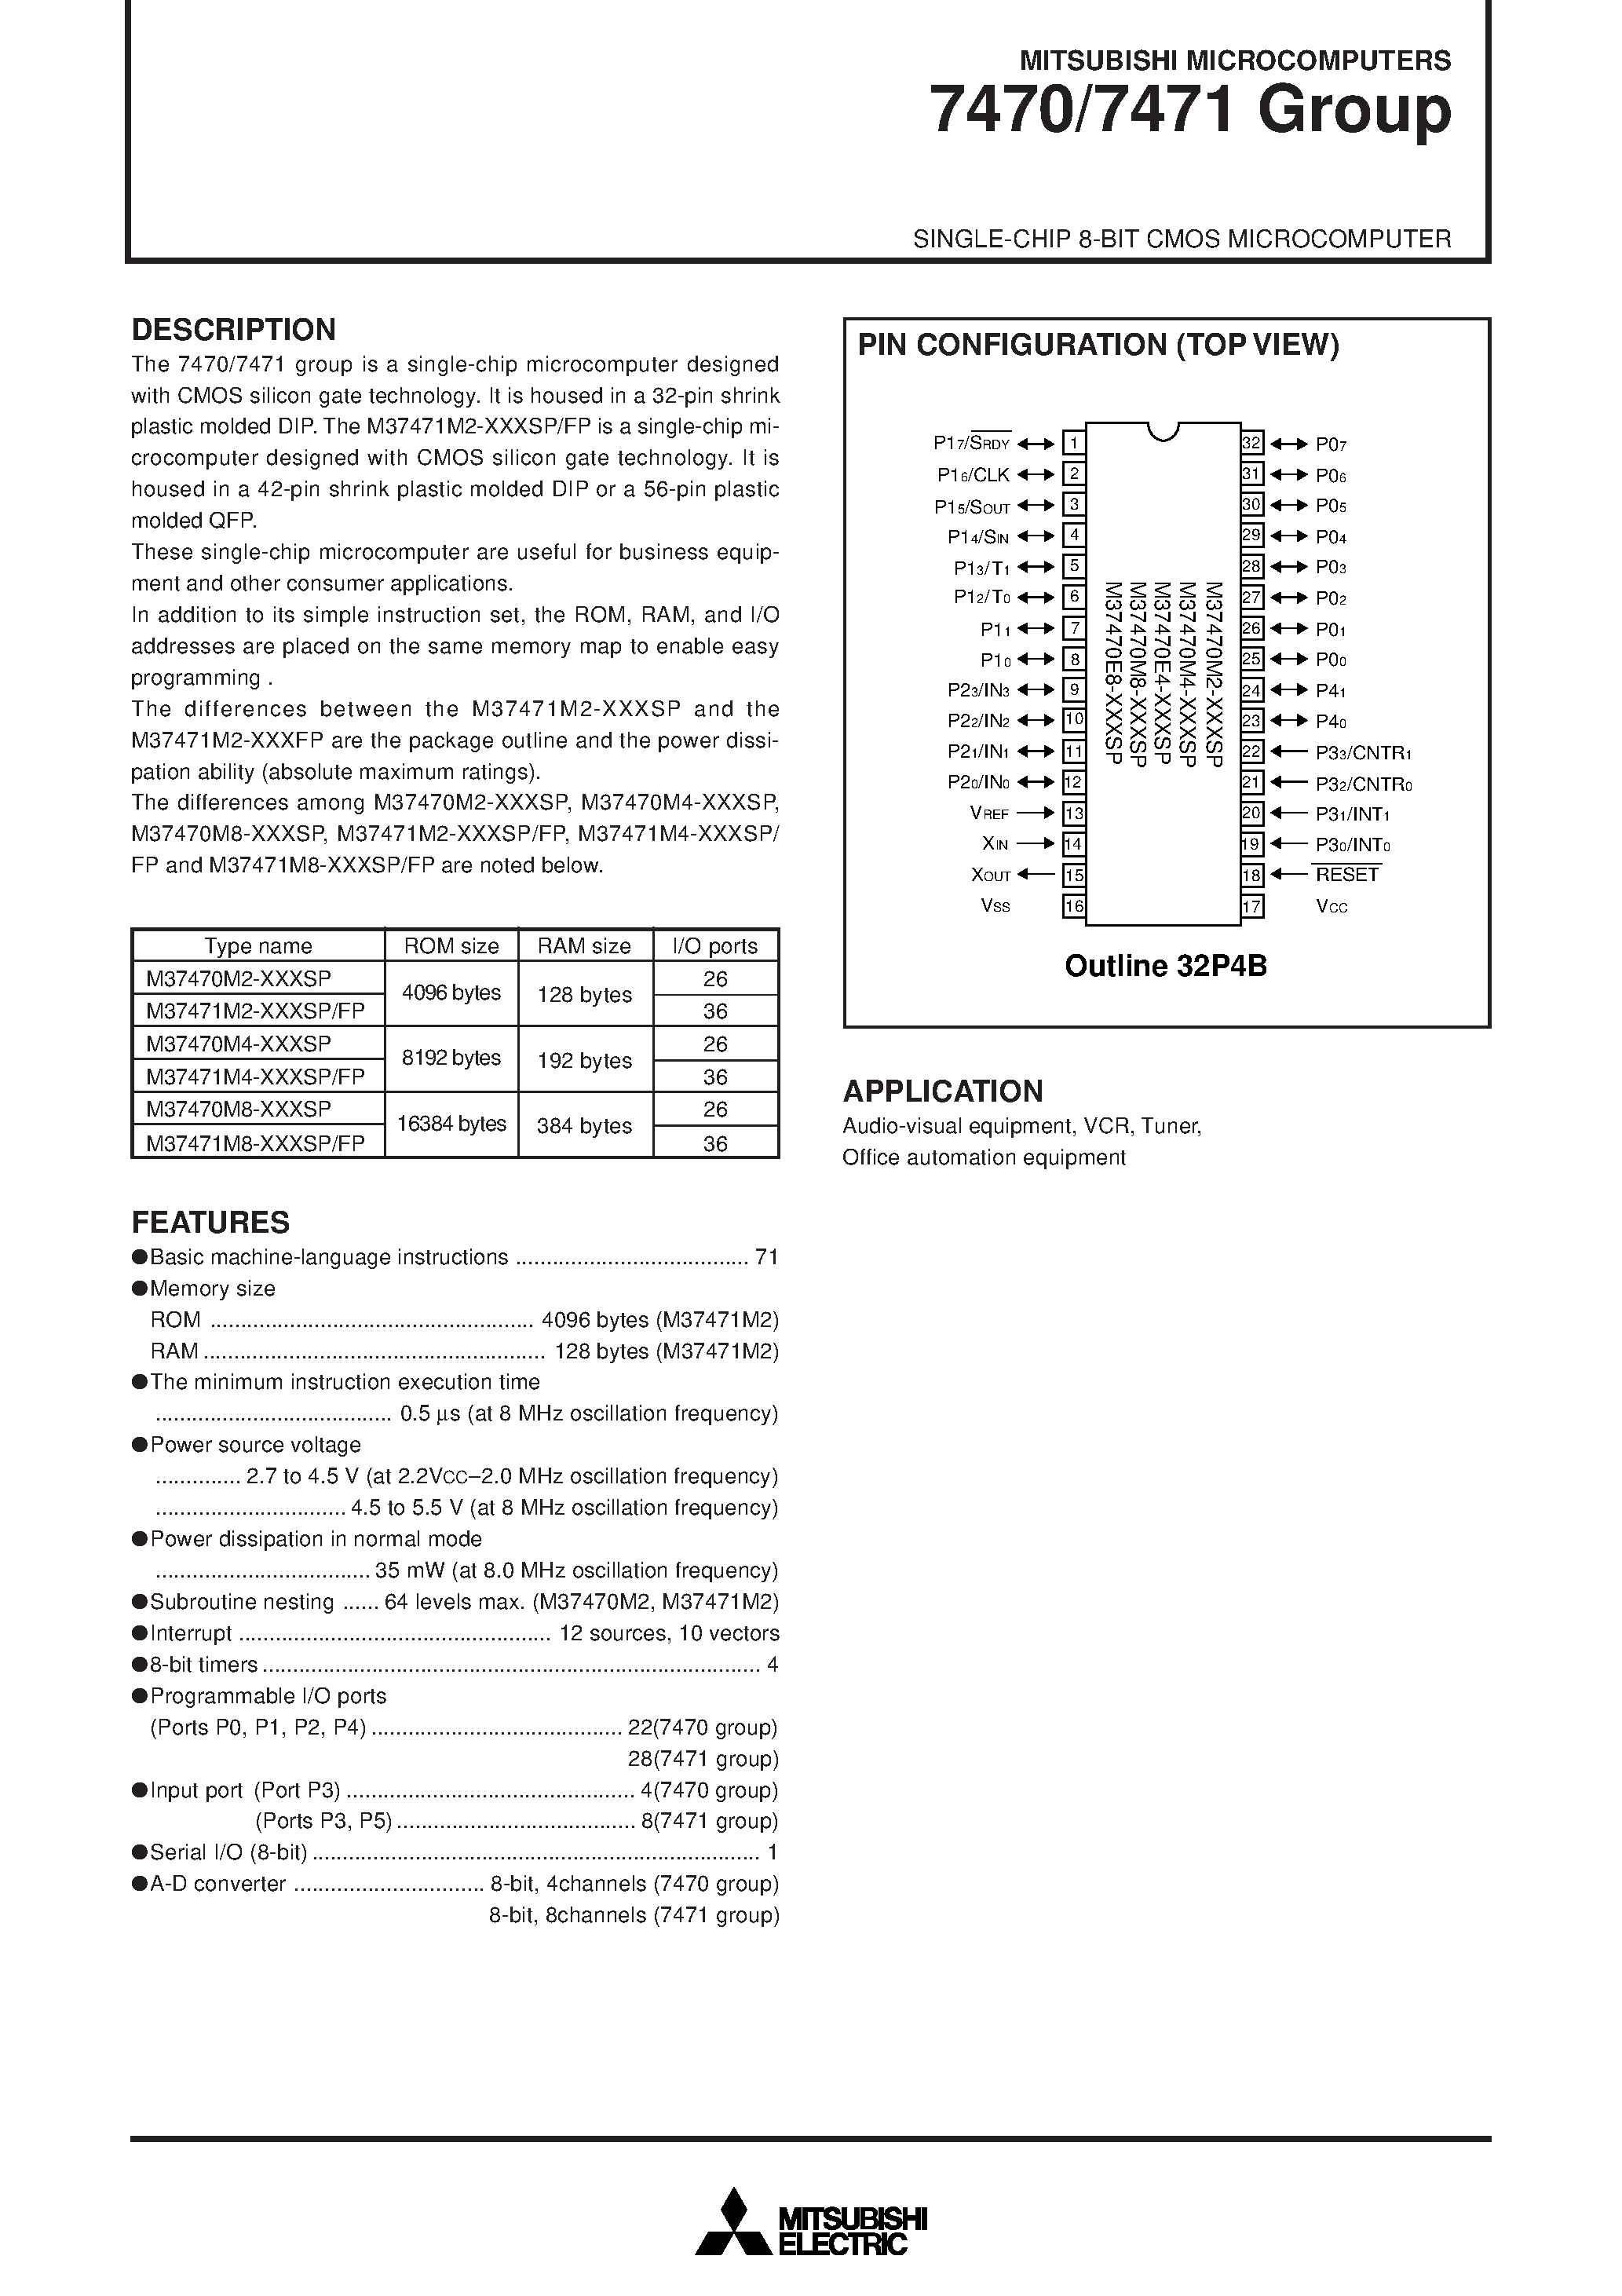 Datasheet M37470M4-743SP - SINGLE-CHIP 8-BIT CMOS MICROCOMPUTER page 1